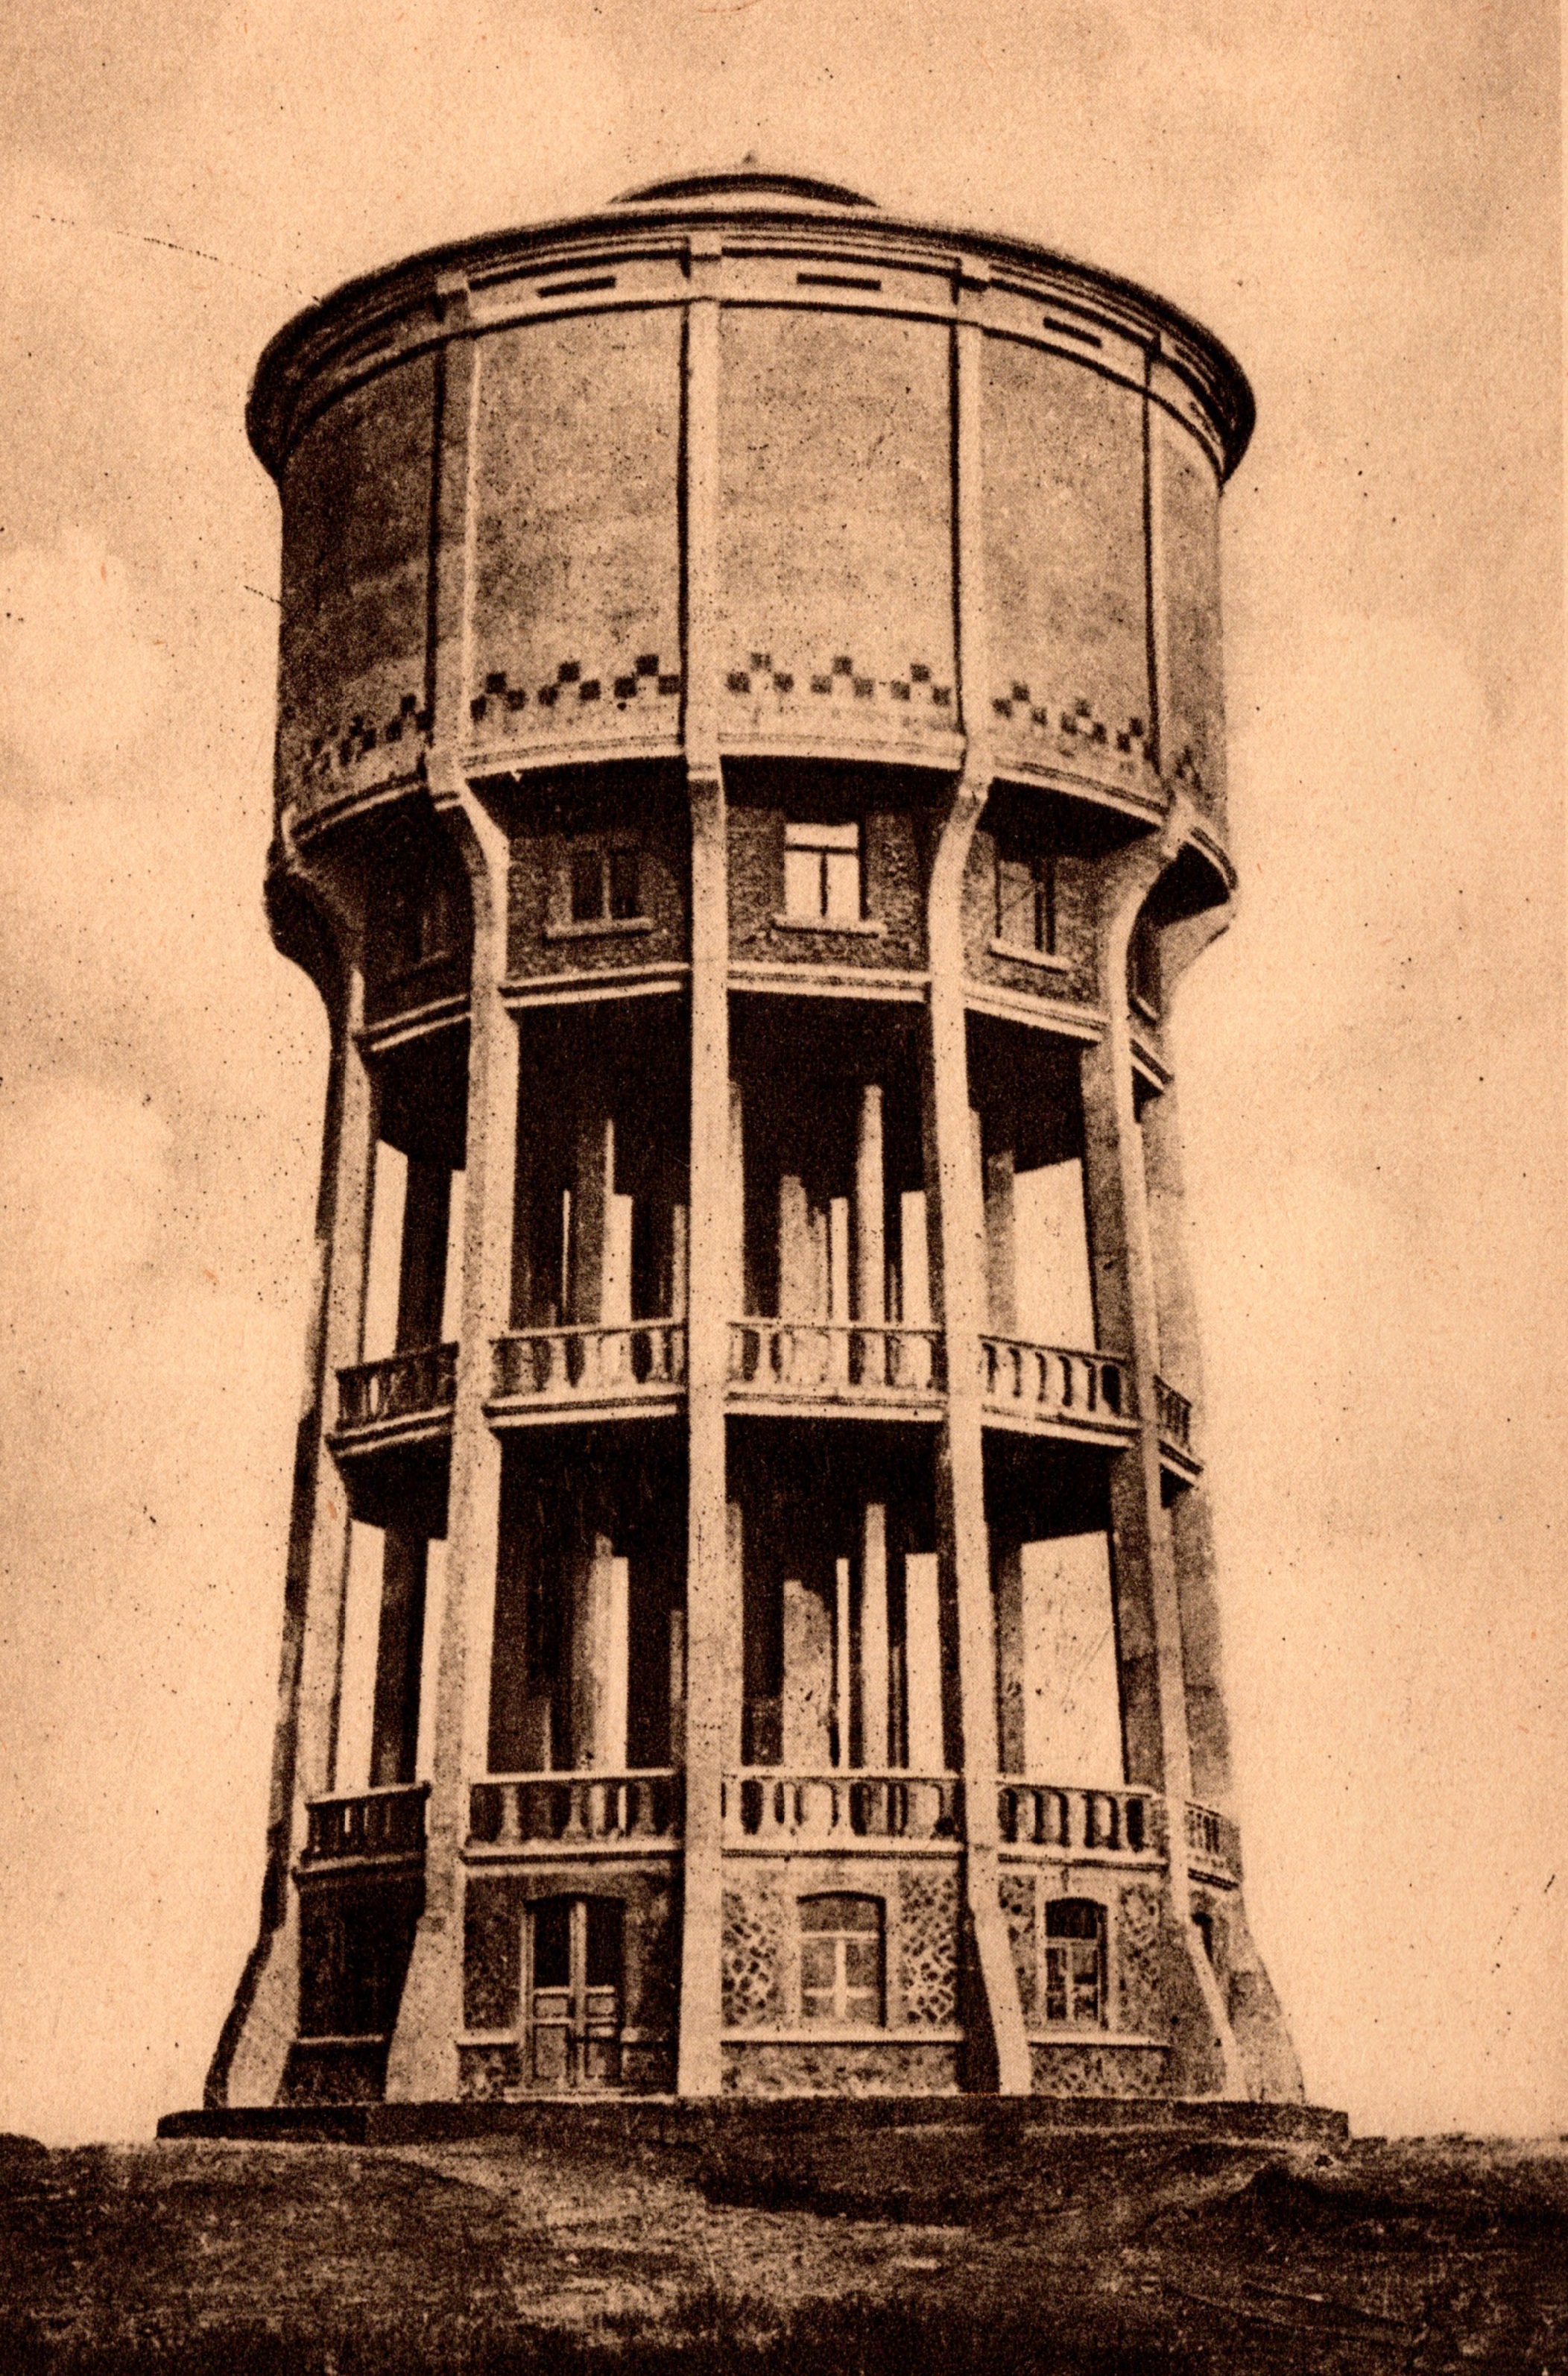 The Watertower of Camp Beverlo